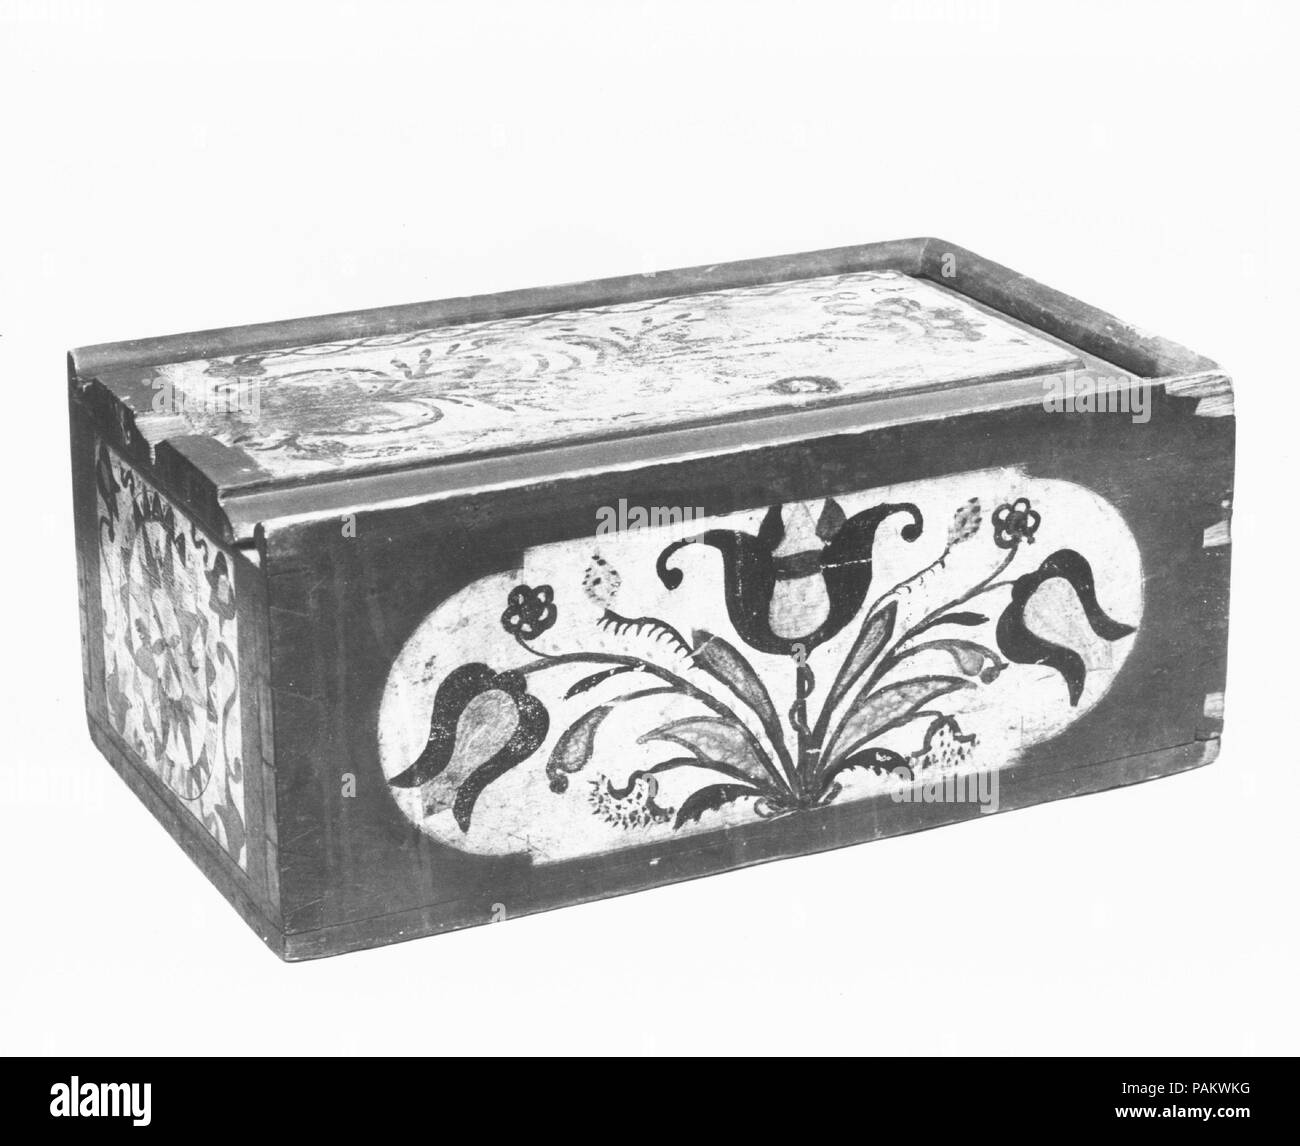 Candle Box. Culture: American. Dimensions: 6 1/2 x 15 x 9 1/2 in. (16.5 x 38.1 x 24.1 cm). Date: 1783. Museum: Metropolitan Museum of Art, New York, USA. Stock Photo